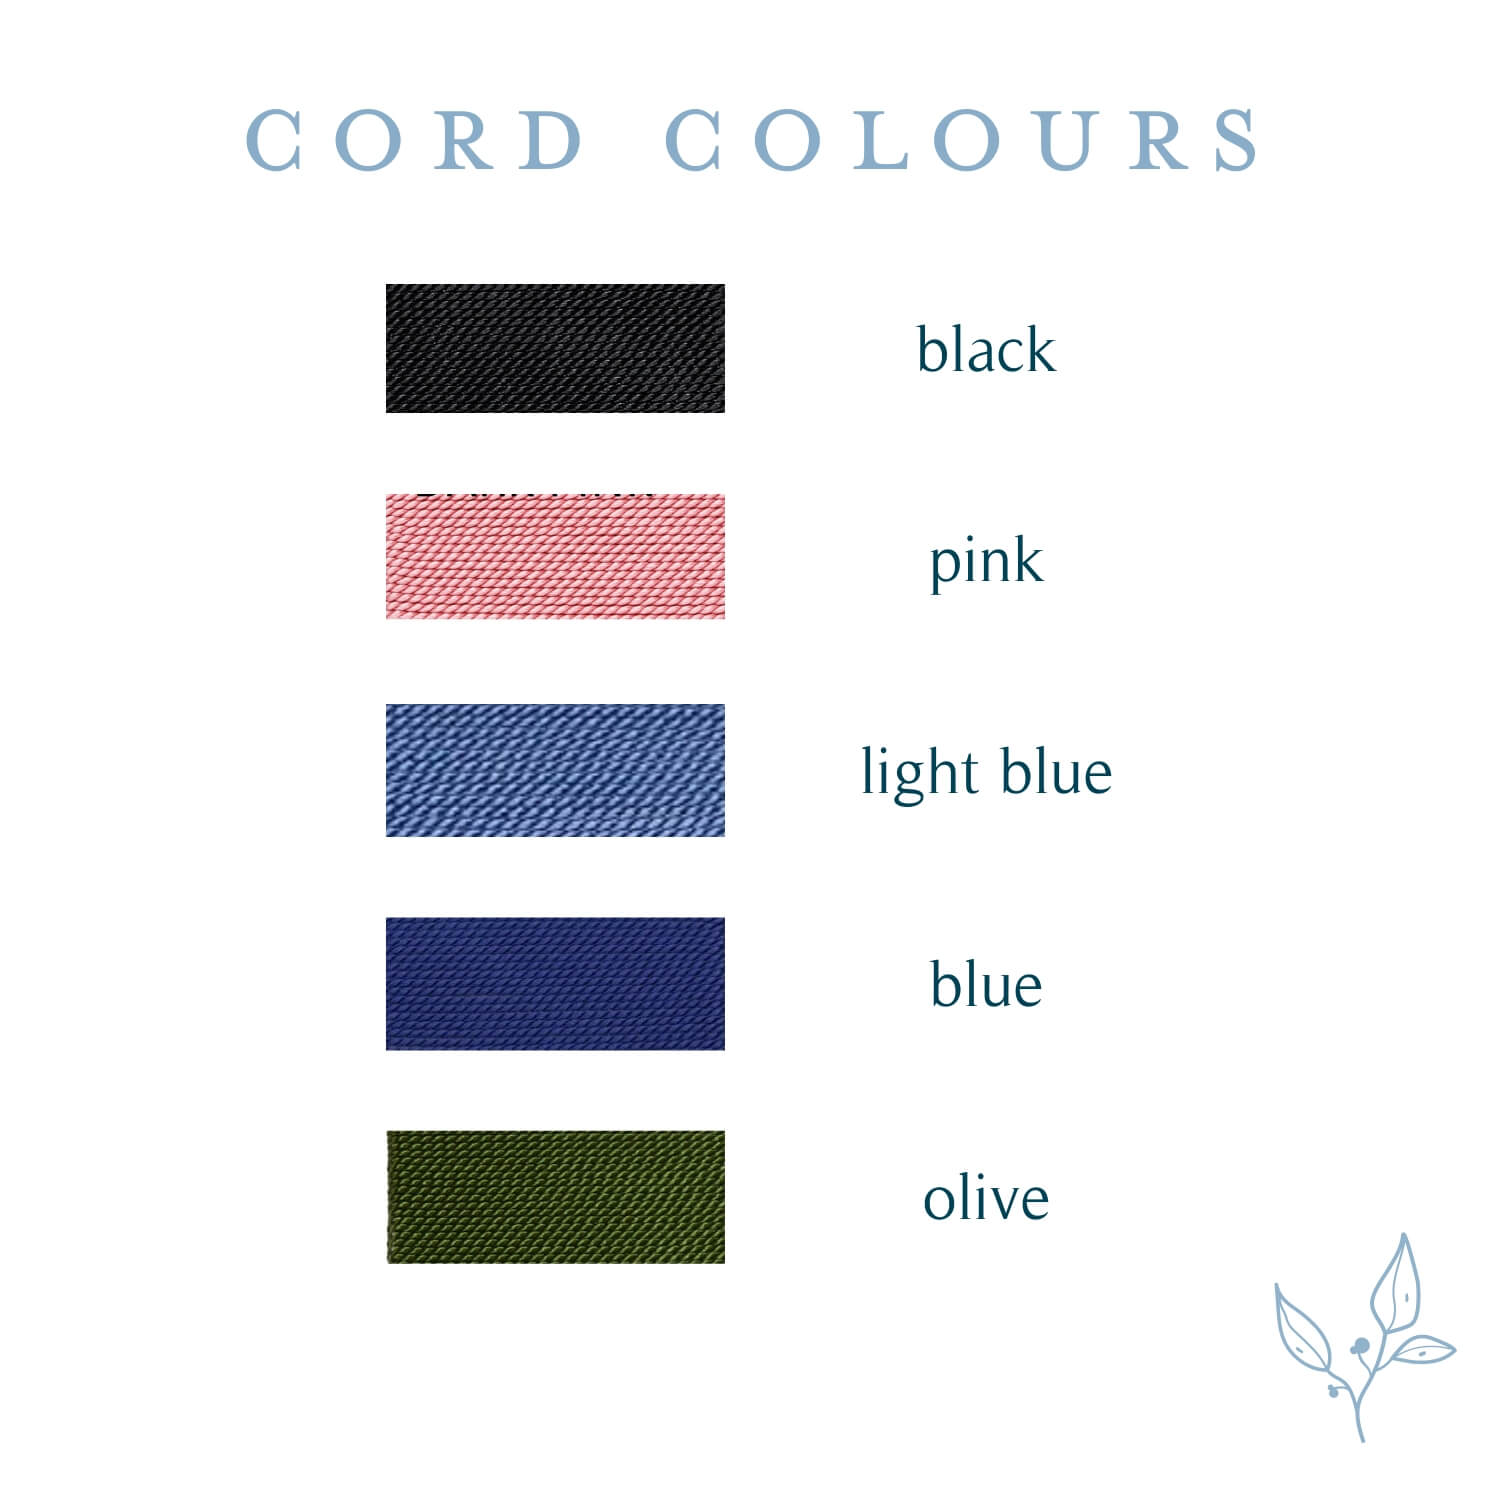 Morse Code Bracelet available cord colours - black, pink, light blue, blue, olive